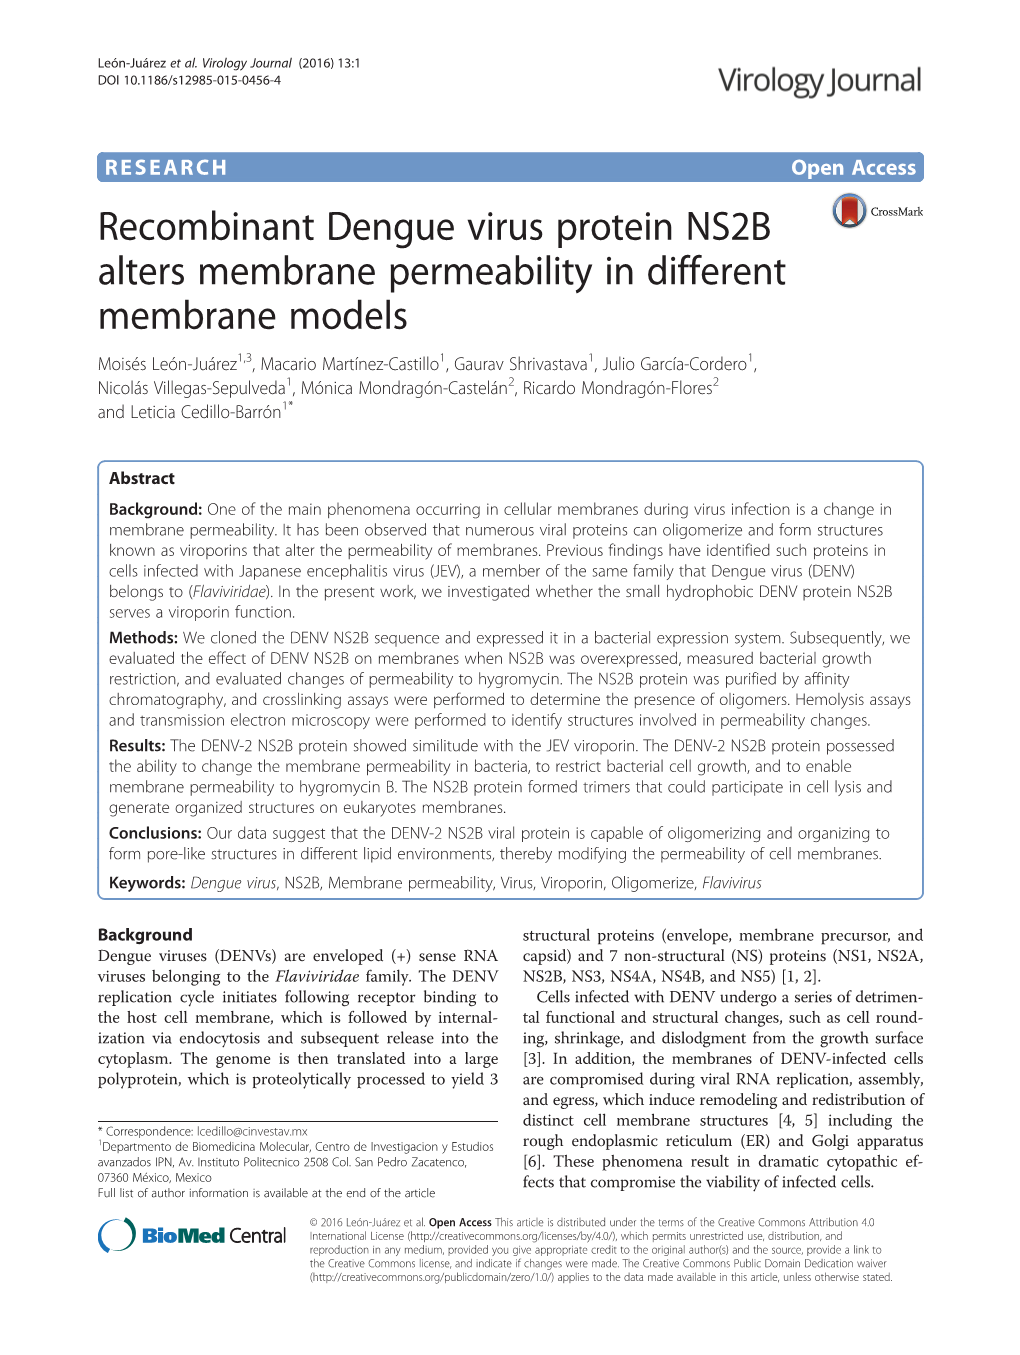 Recombinant Dengue Virus Protein NS2B Alters Membrane